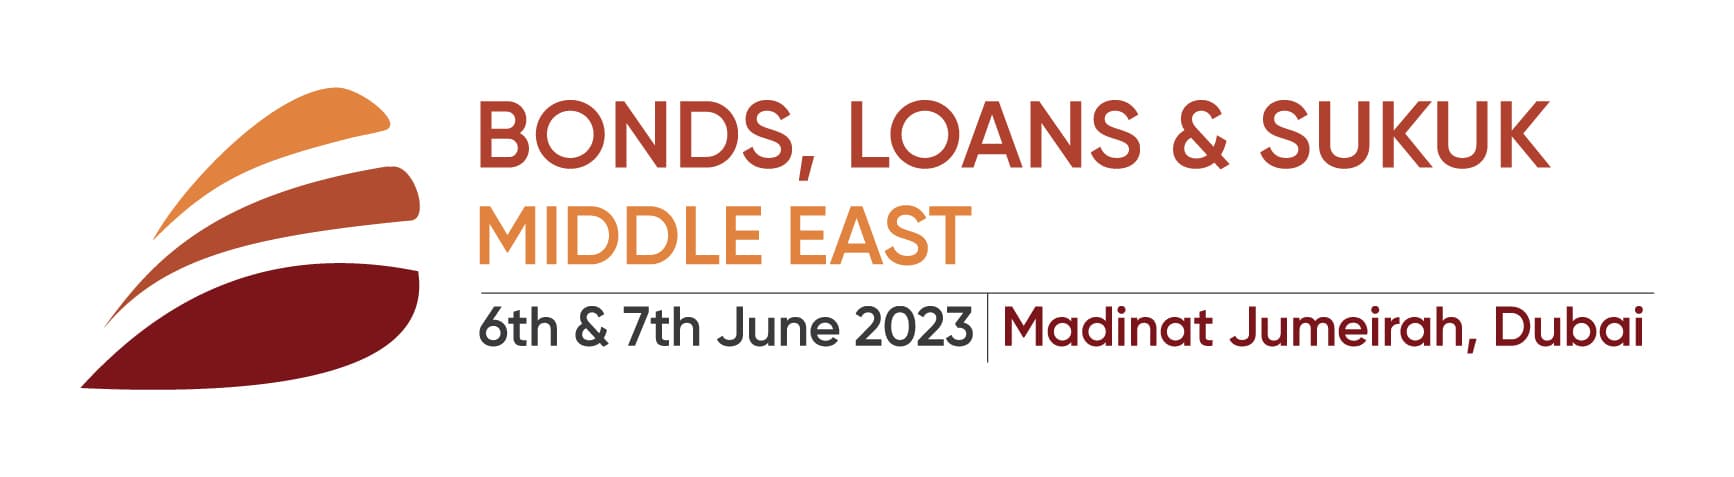 Bonds, Loans & Sukuk Middle East 2023